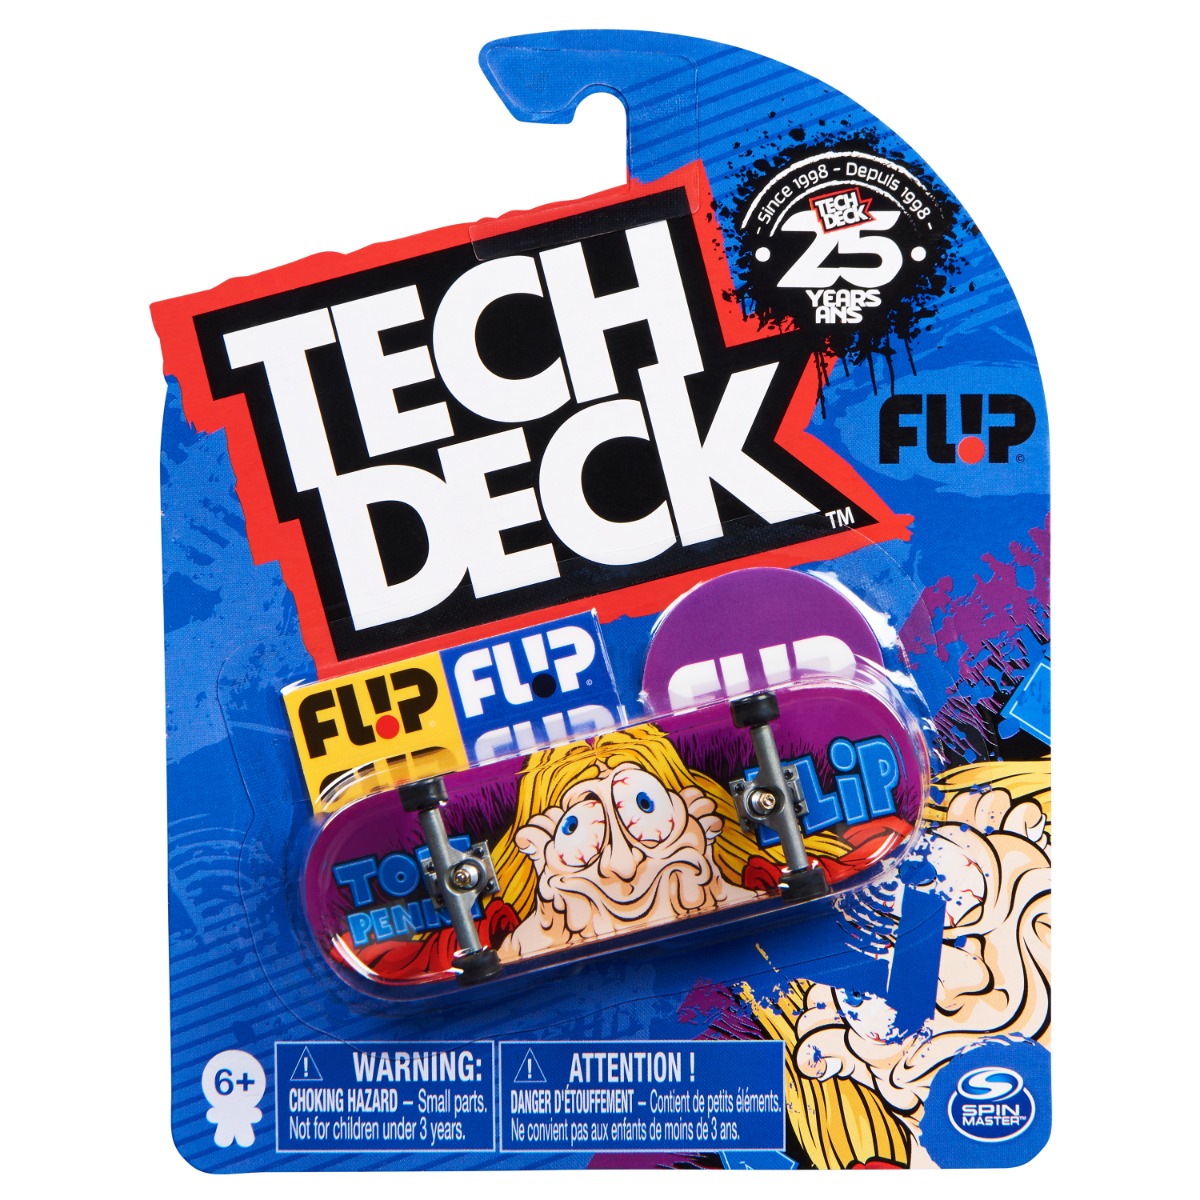 Mini placa skateboard Tech Deck, Flip Tom Penny 25 Years, 20141237 20141237